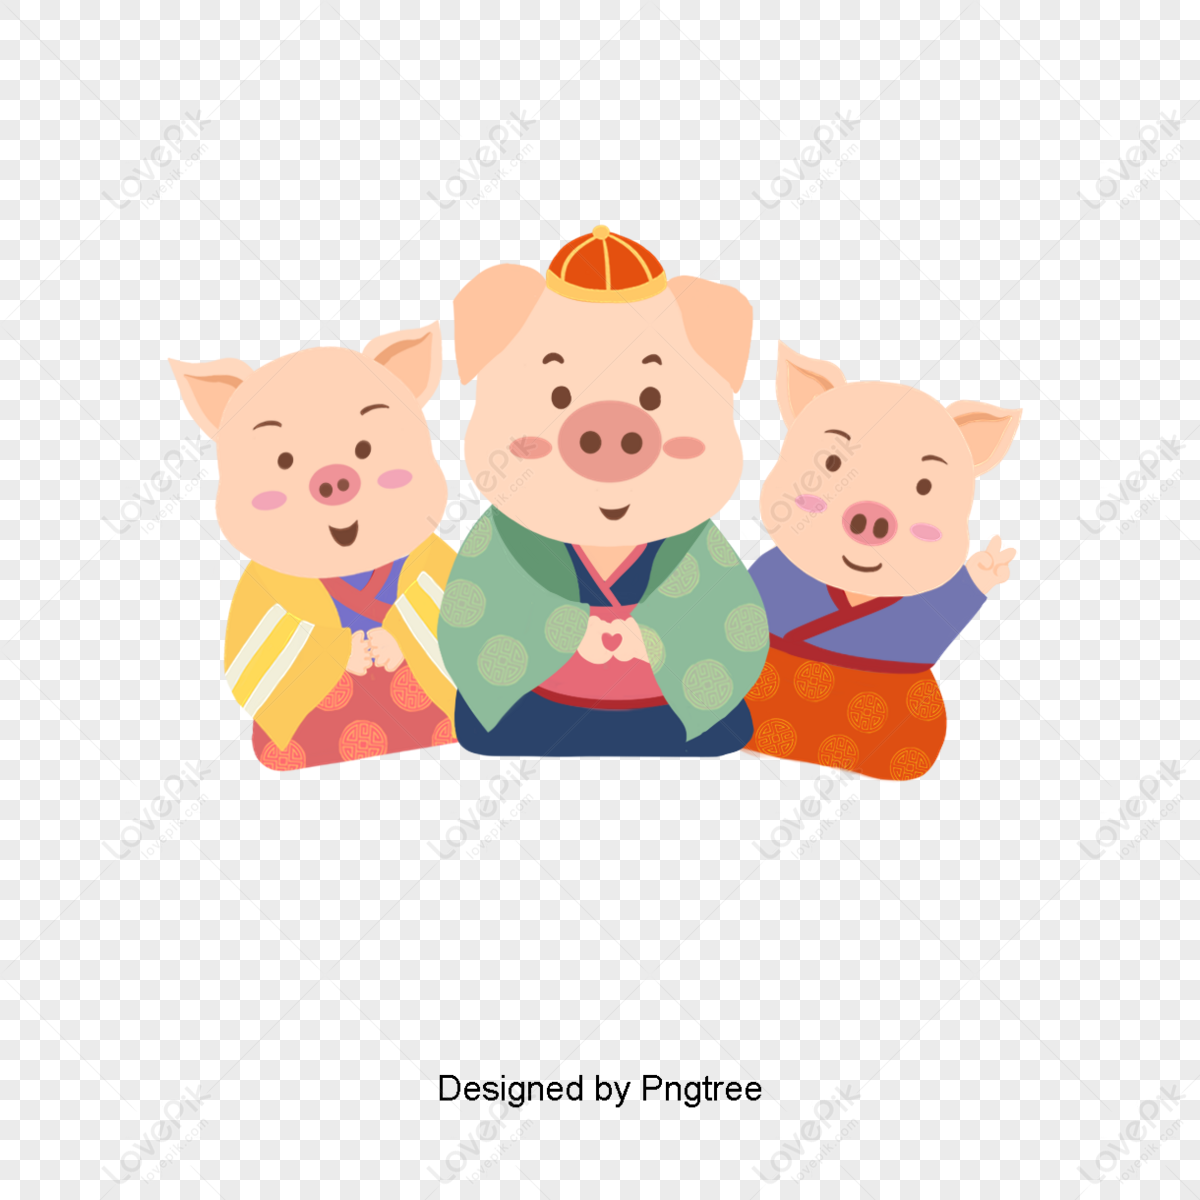 Cartoon pig wearing clothes Royalty Free Vector Image